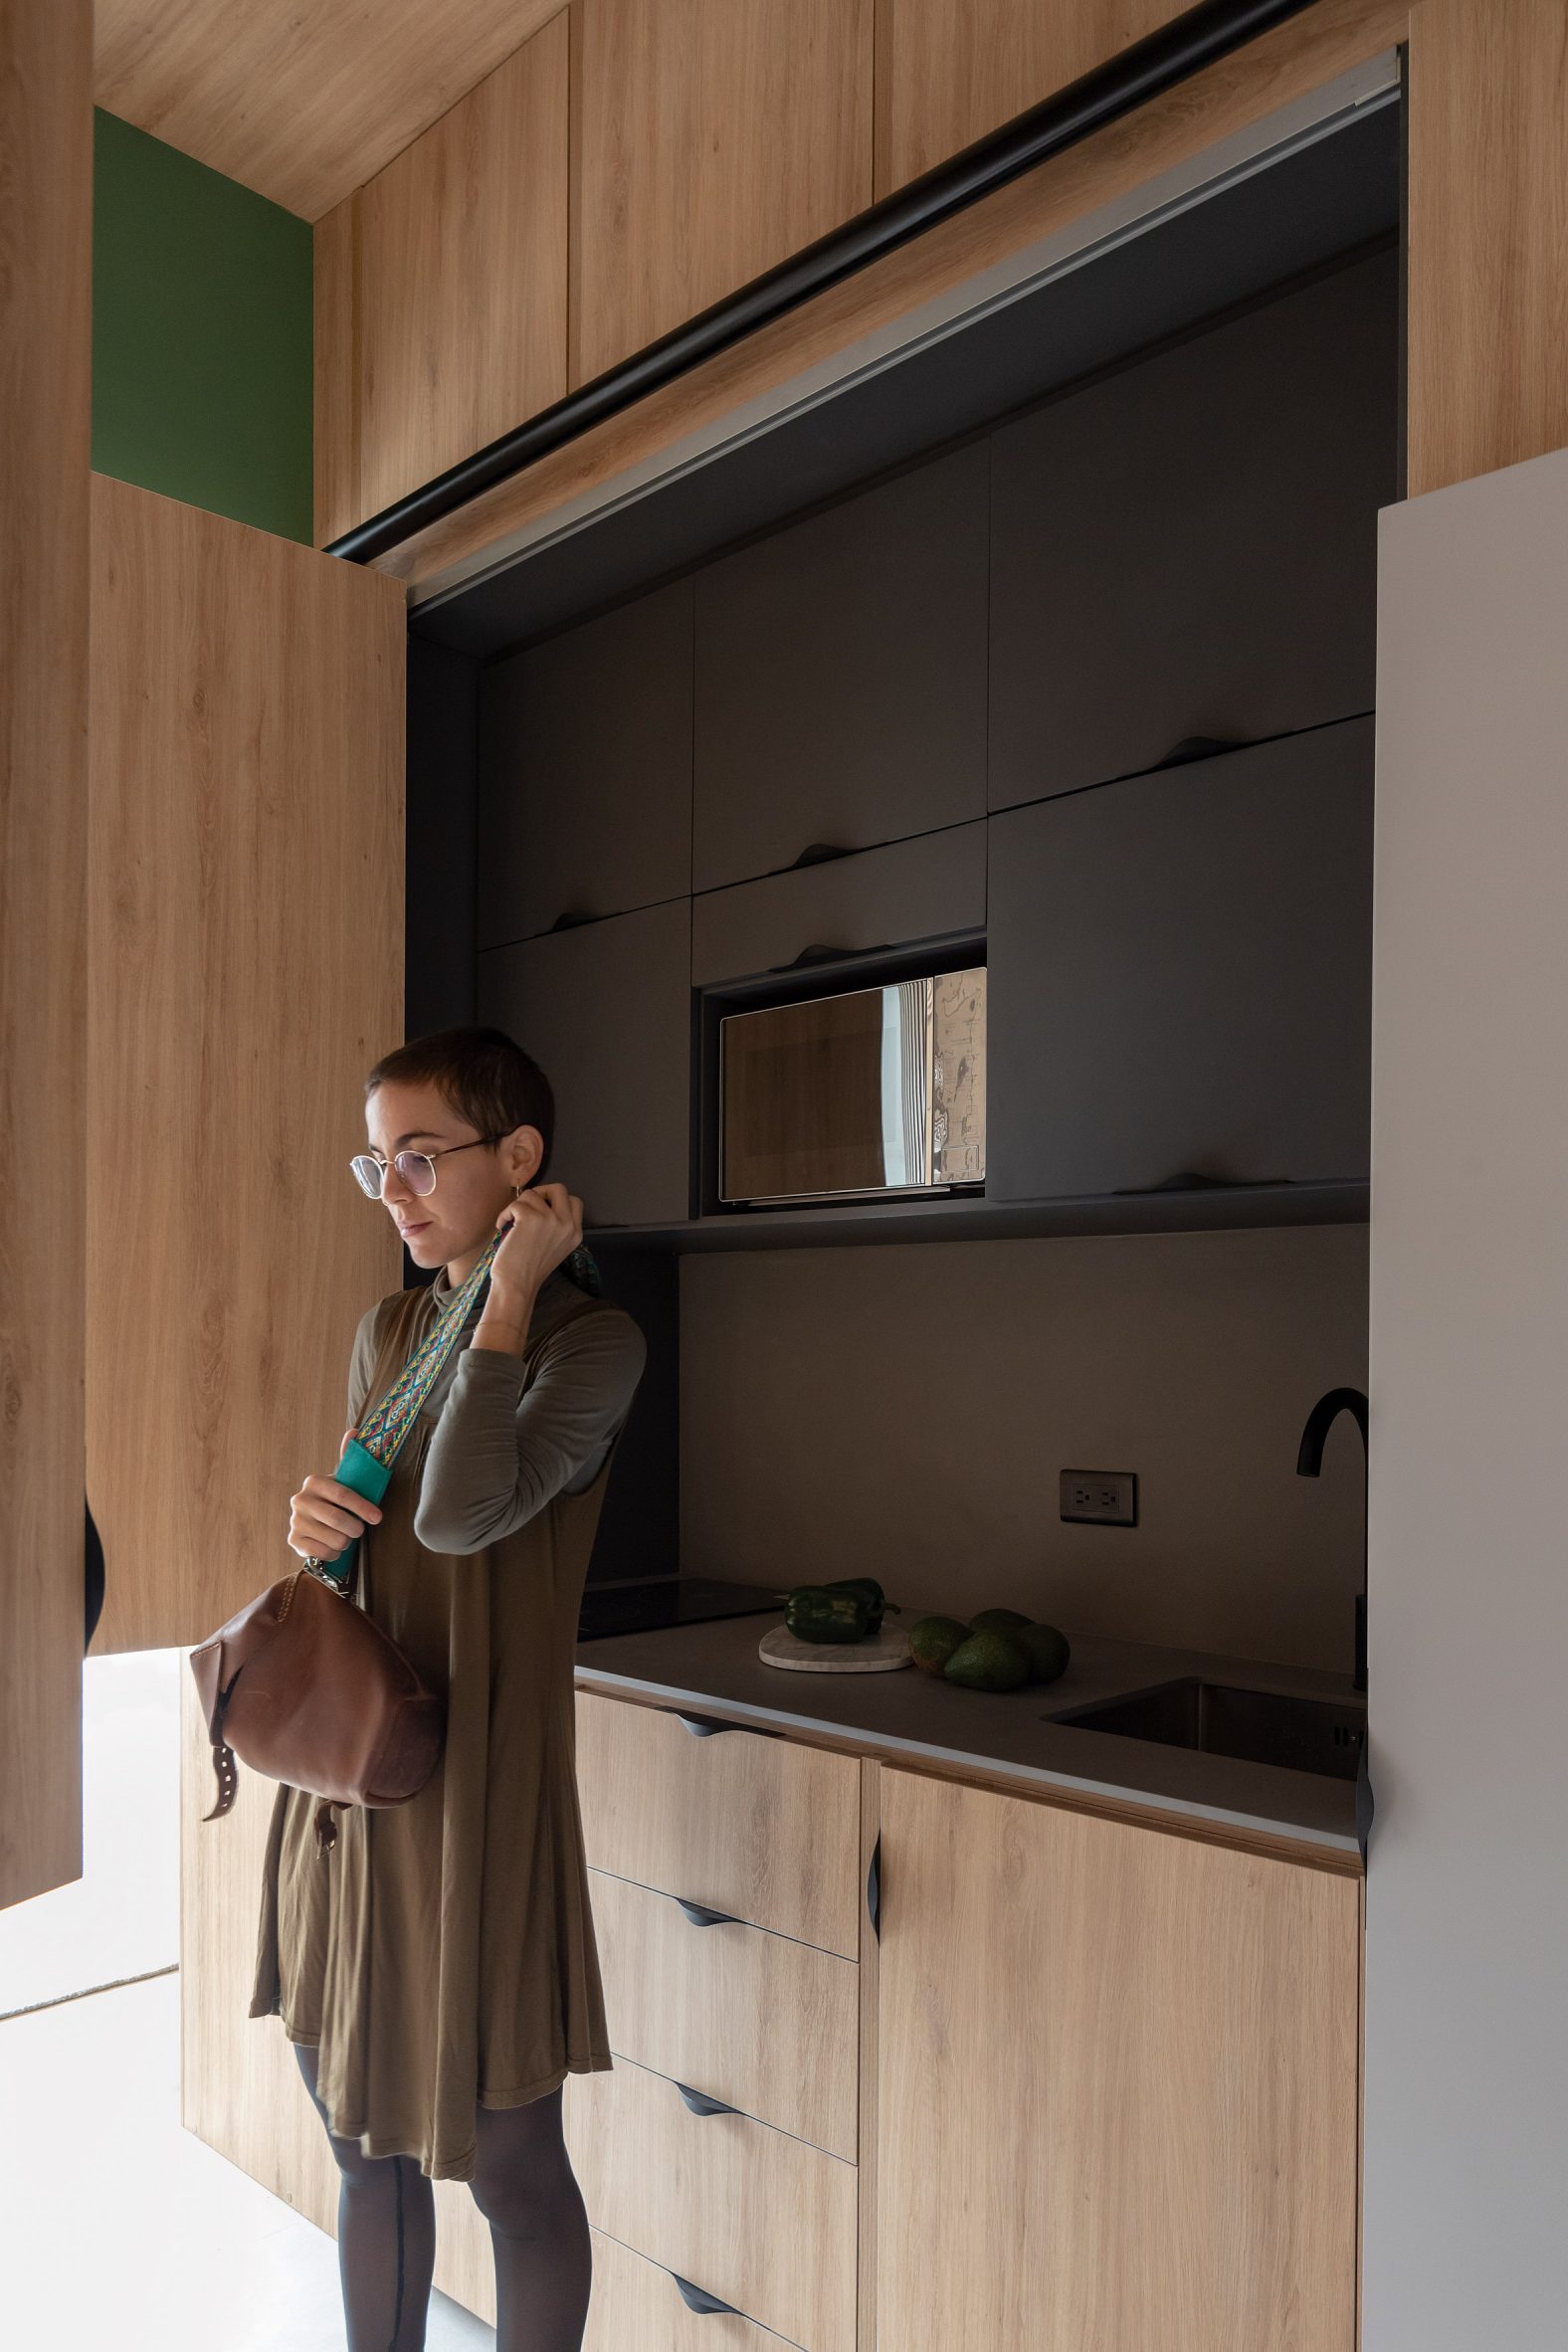 Micro apartment galley kitchen